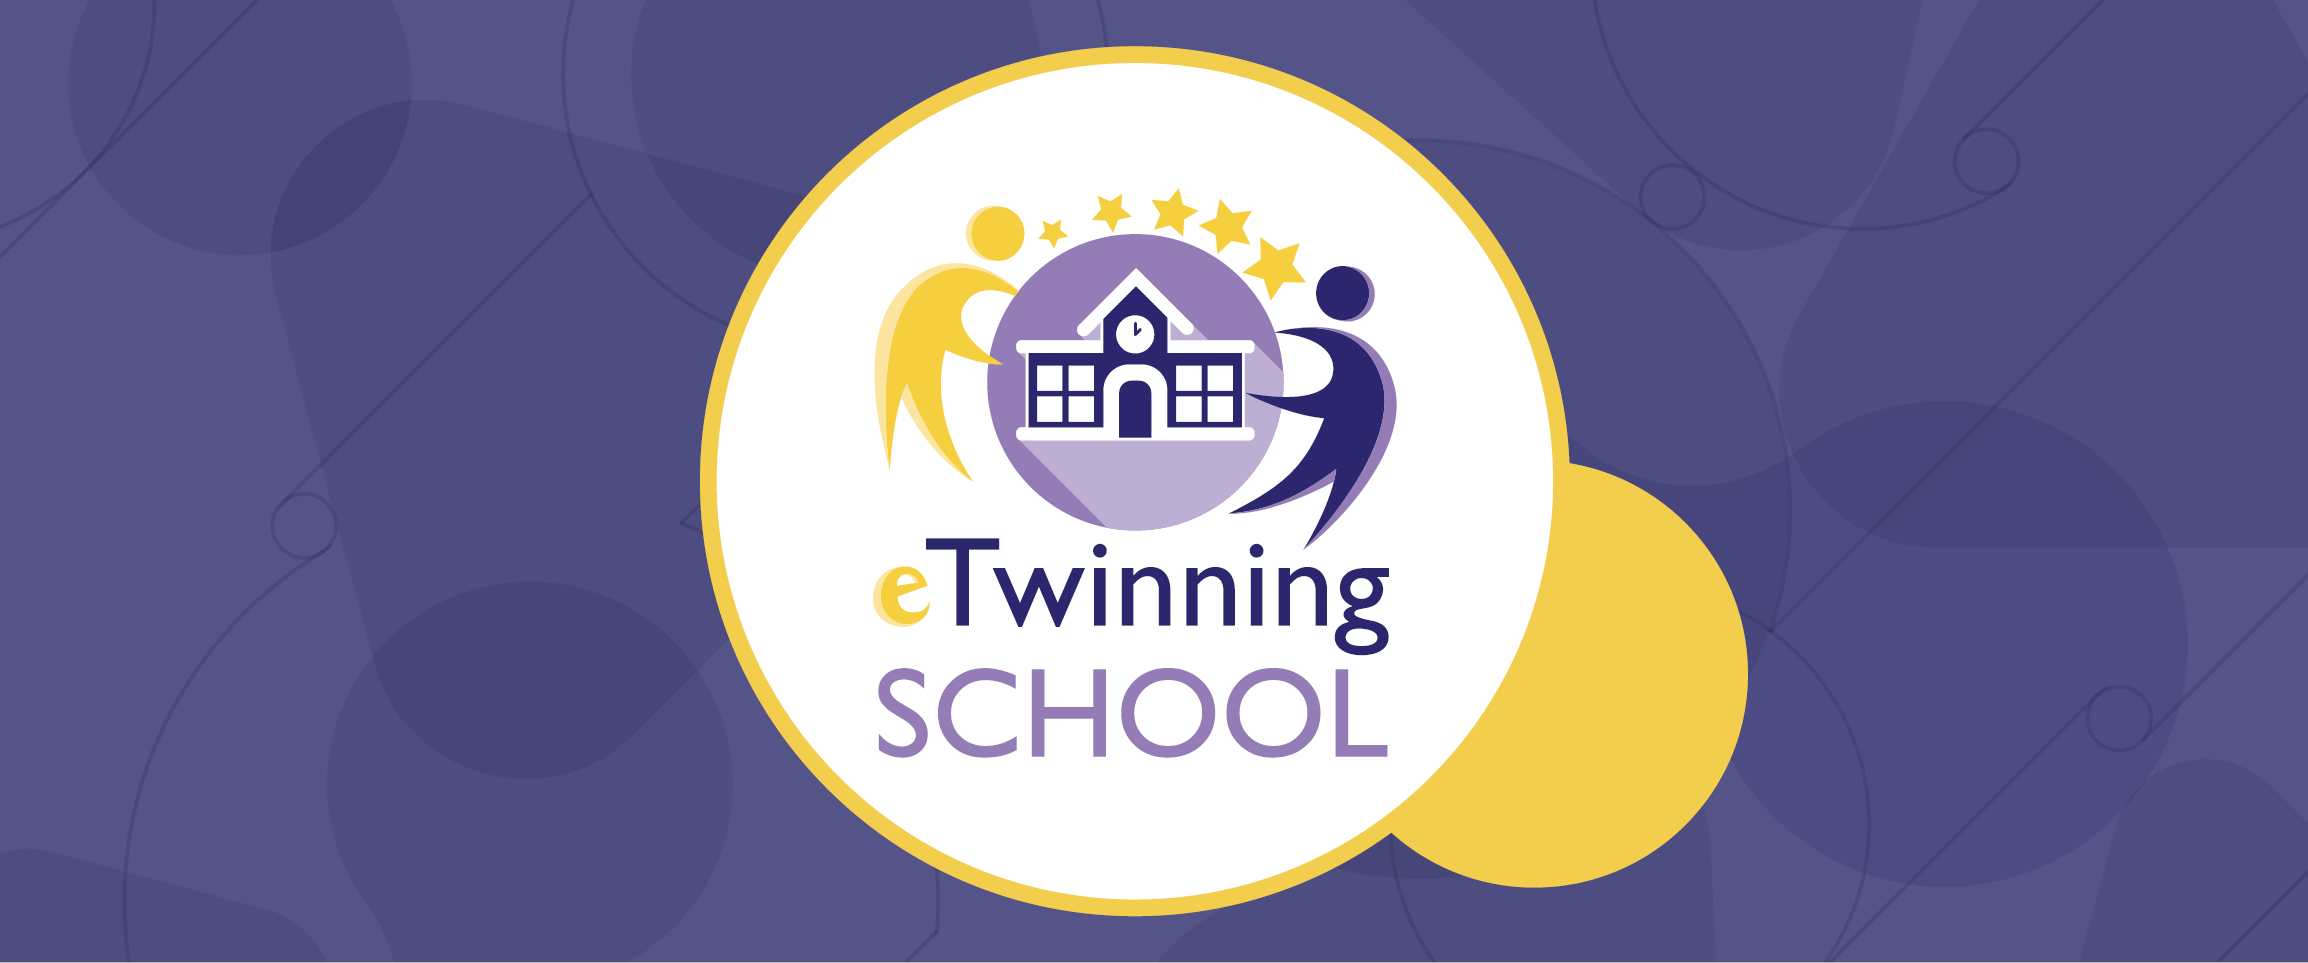 eTwinning School 